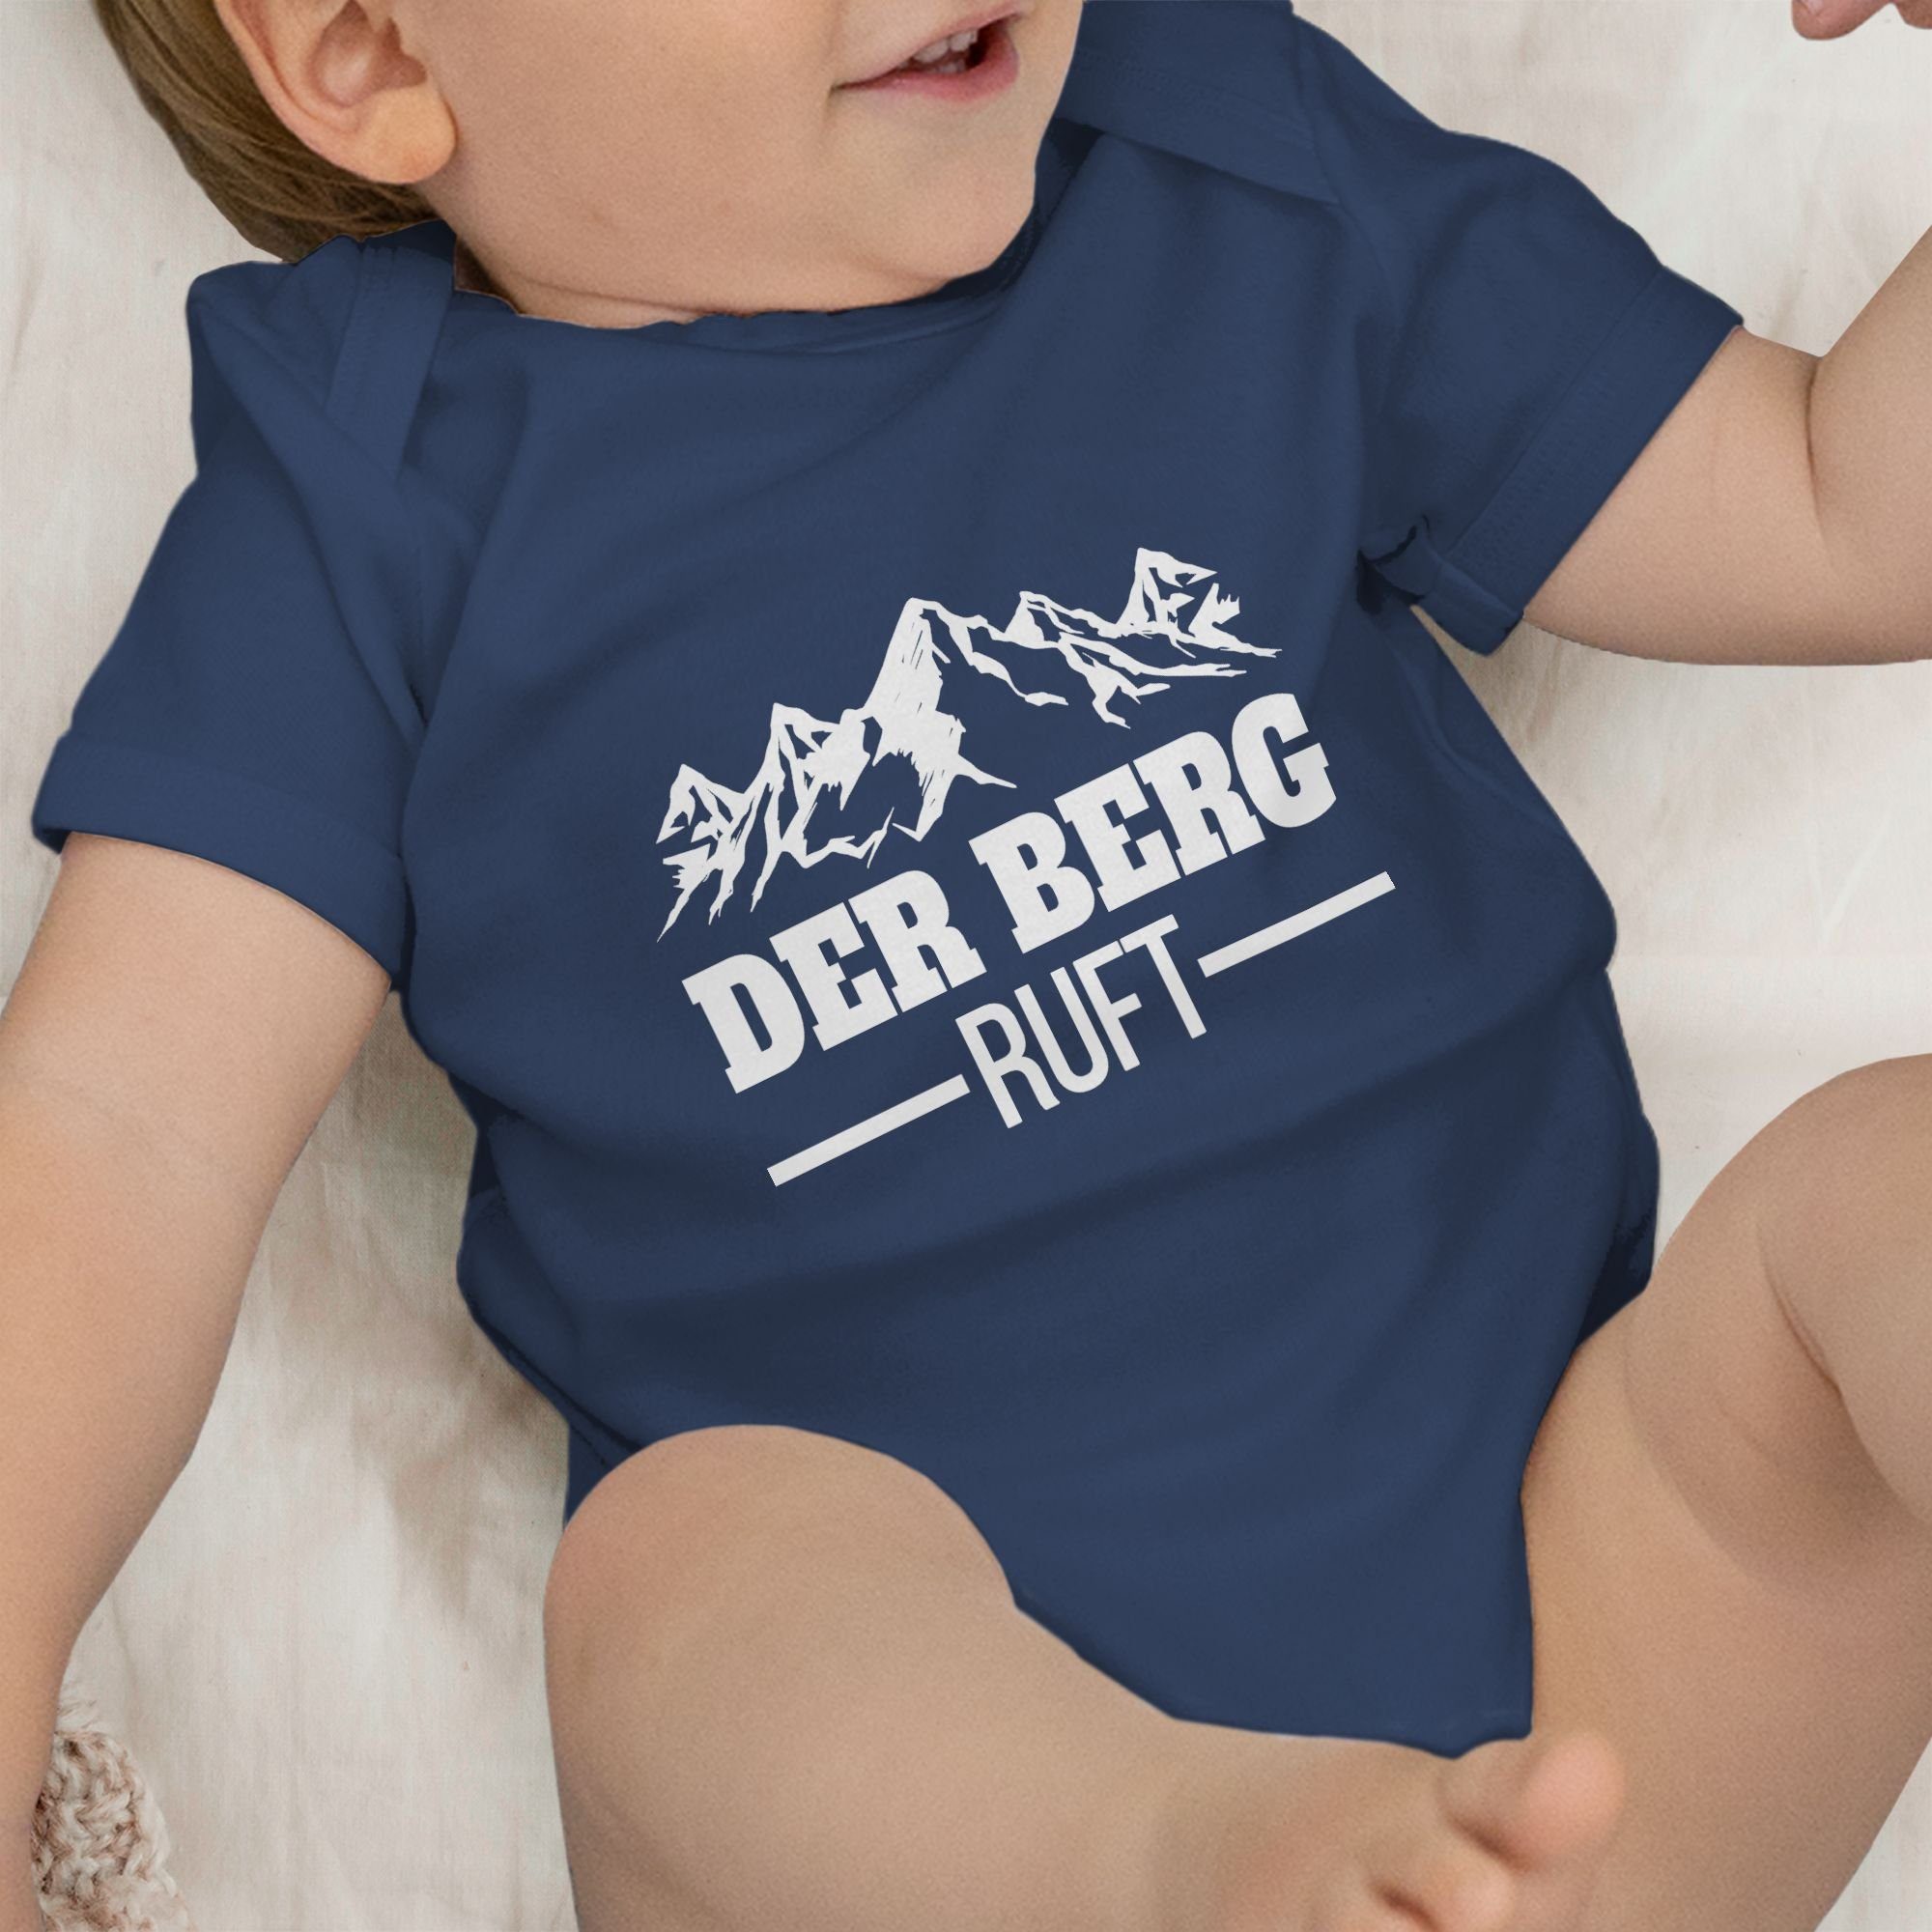 1 Der Shirtbody Berg Blau ruft Navy Bewegung Baby Shirtracer & Sport